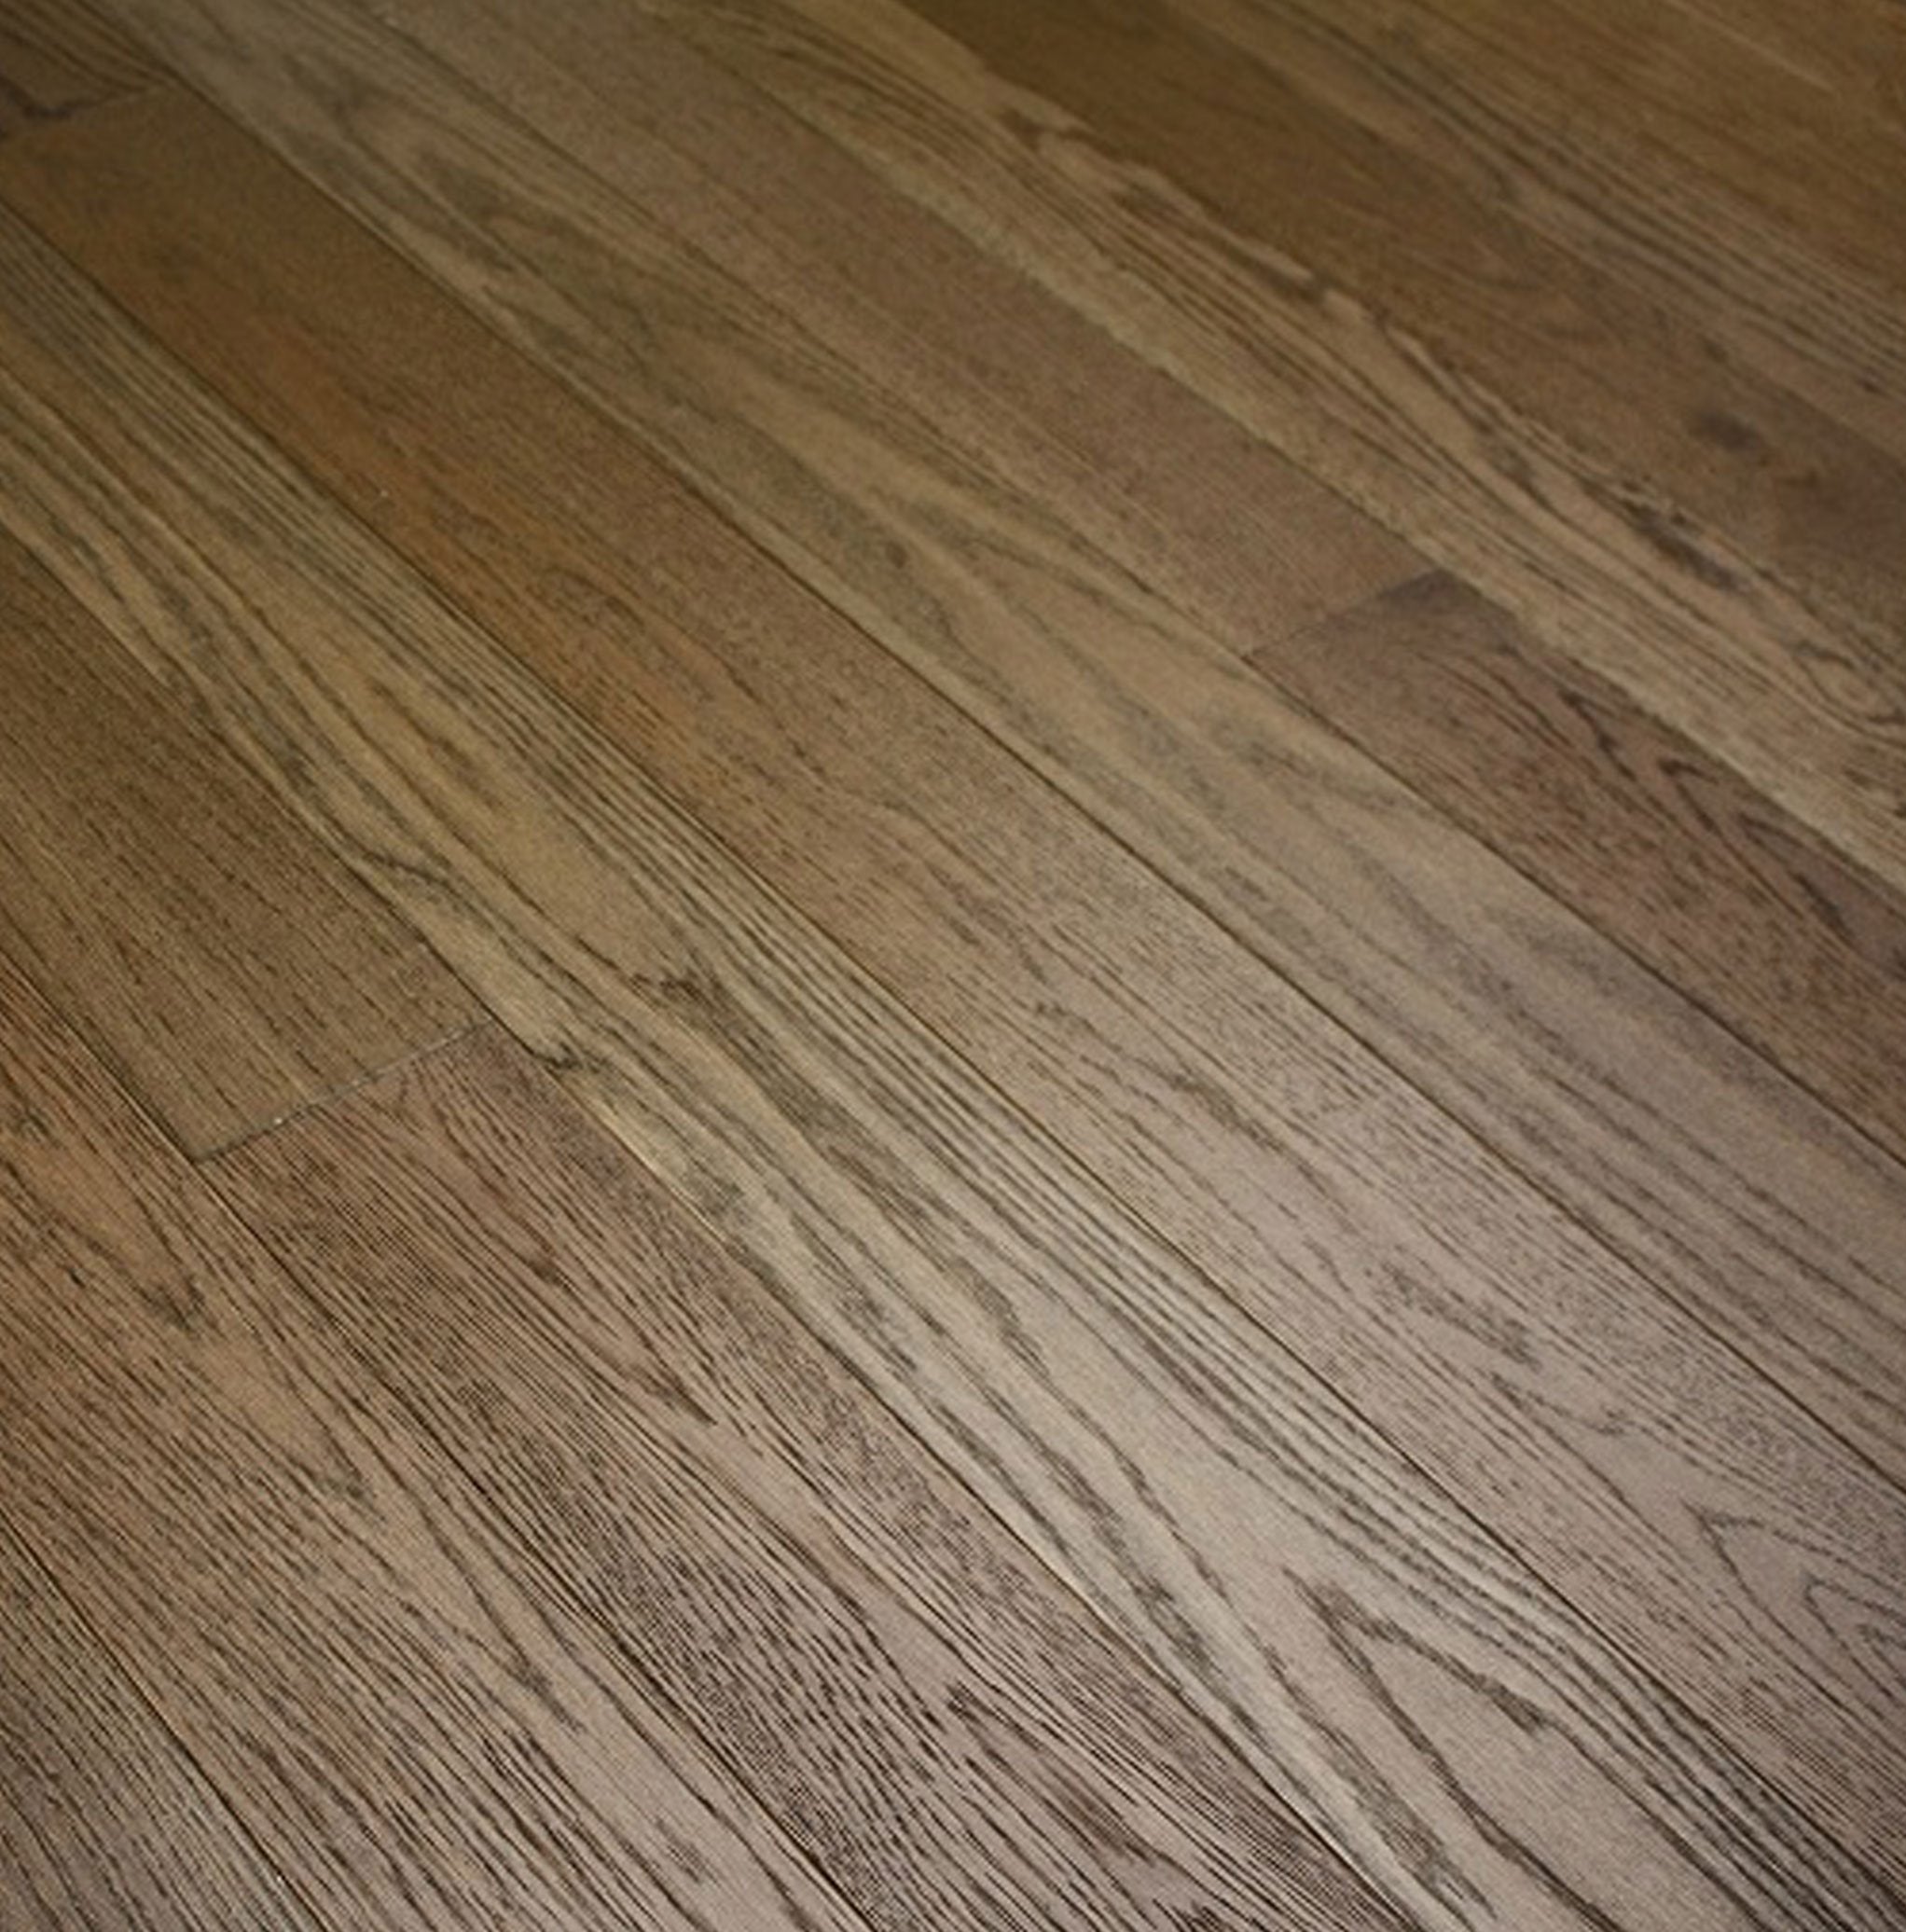 teka studio amareto sawn white oak natural hardwood flooring plank stained light brown distributed by surface group international